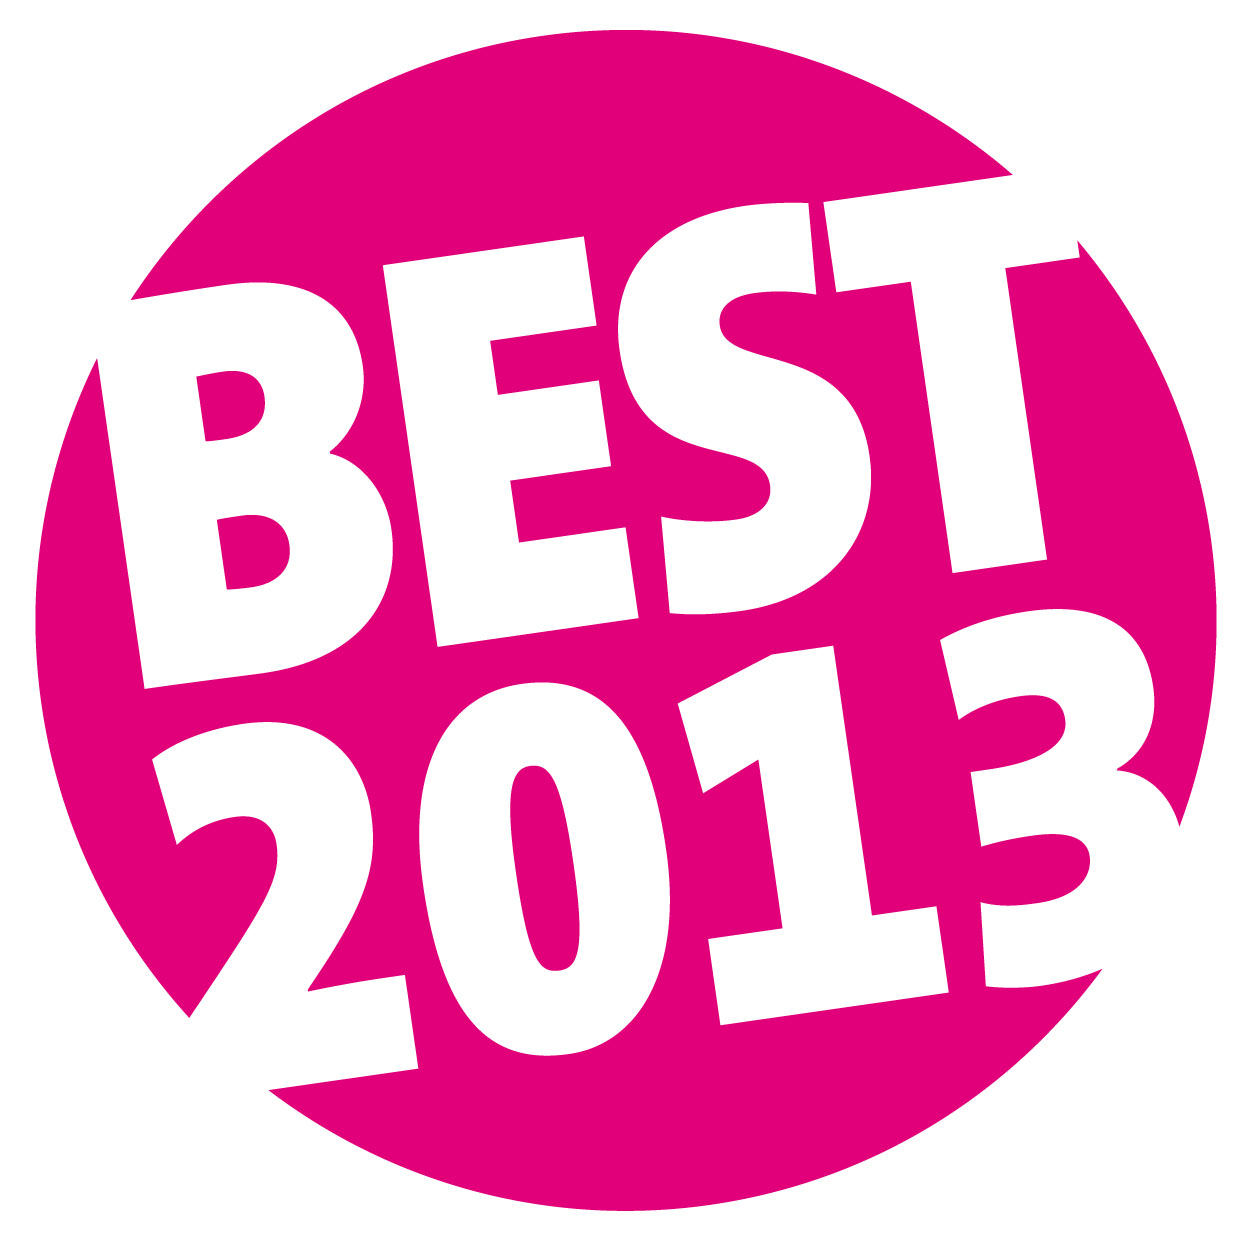 BEST-2013